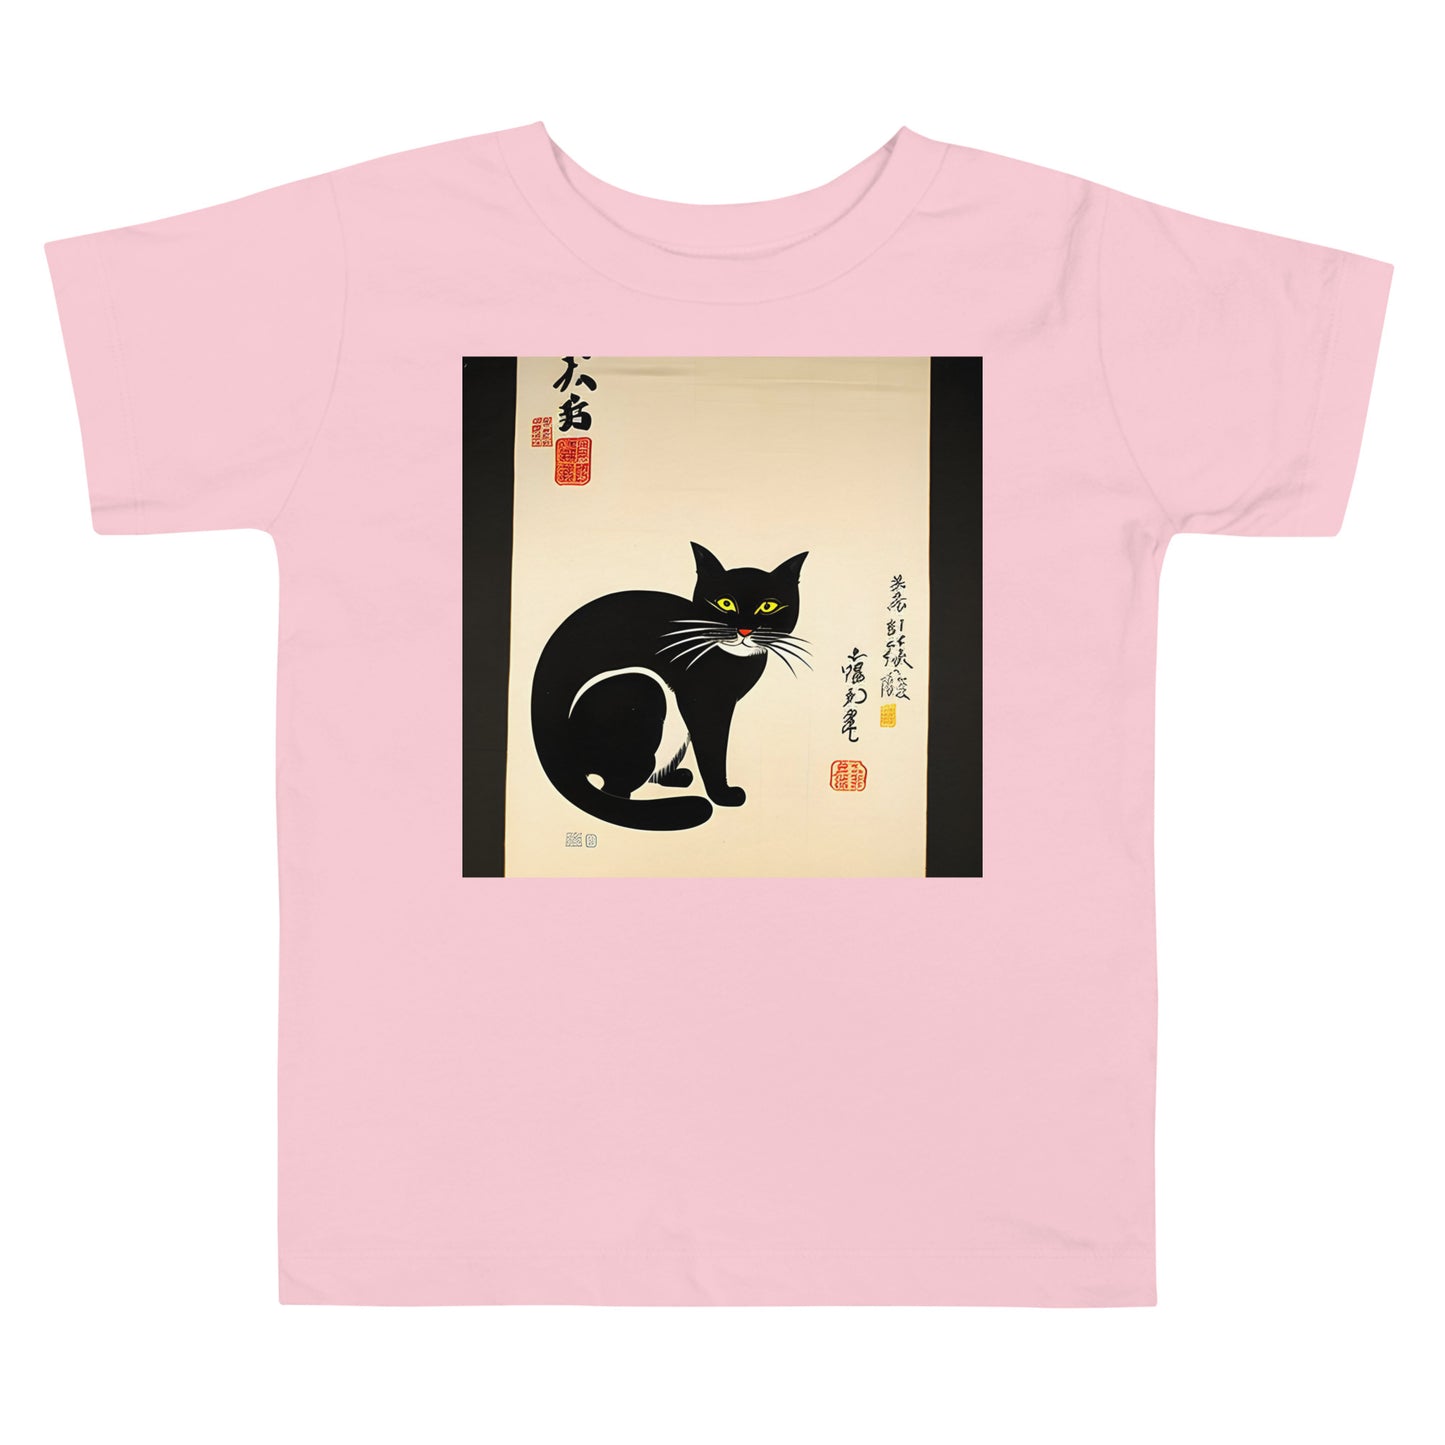 Meowsome Toddler's T-Shirt - 020